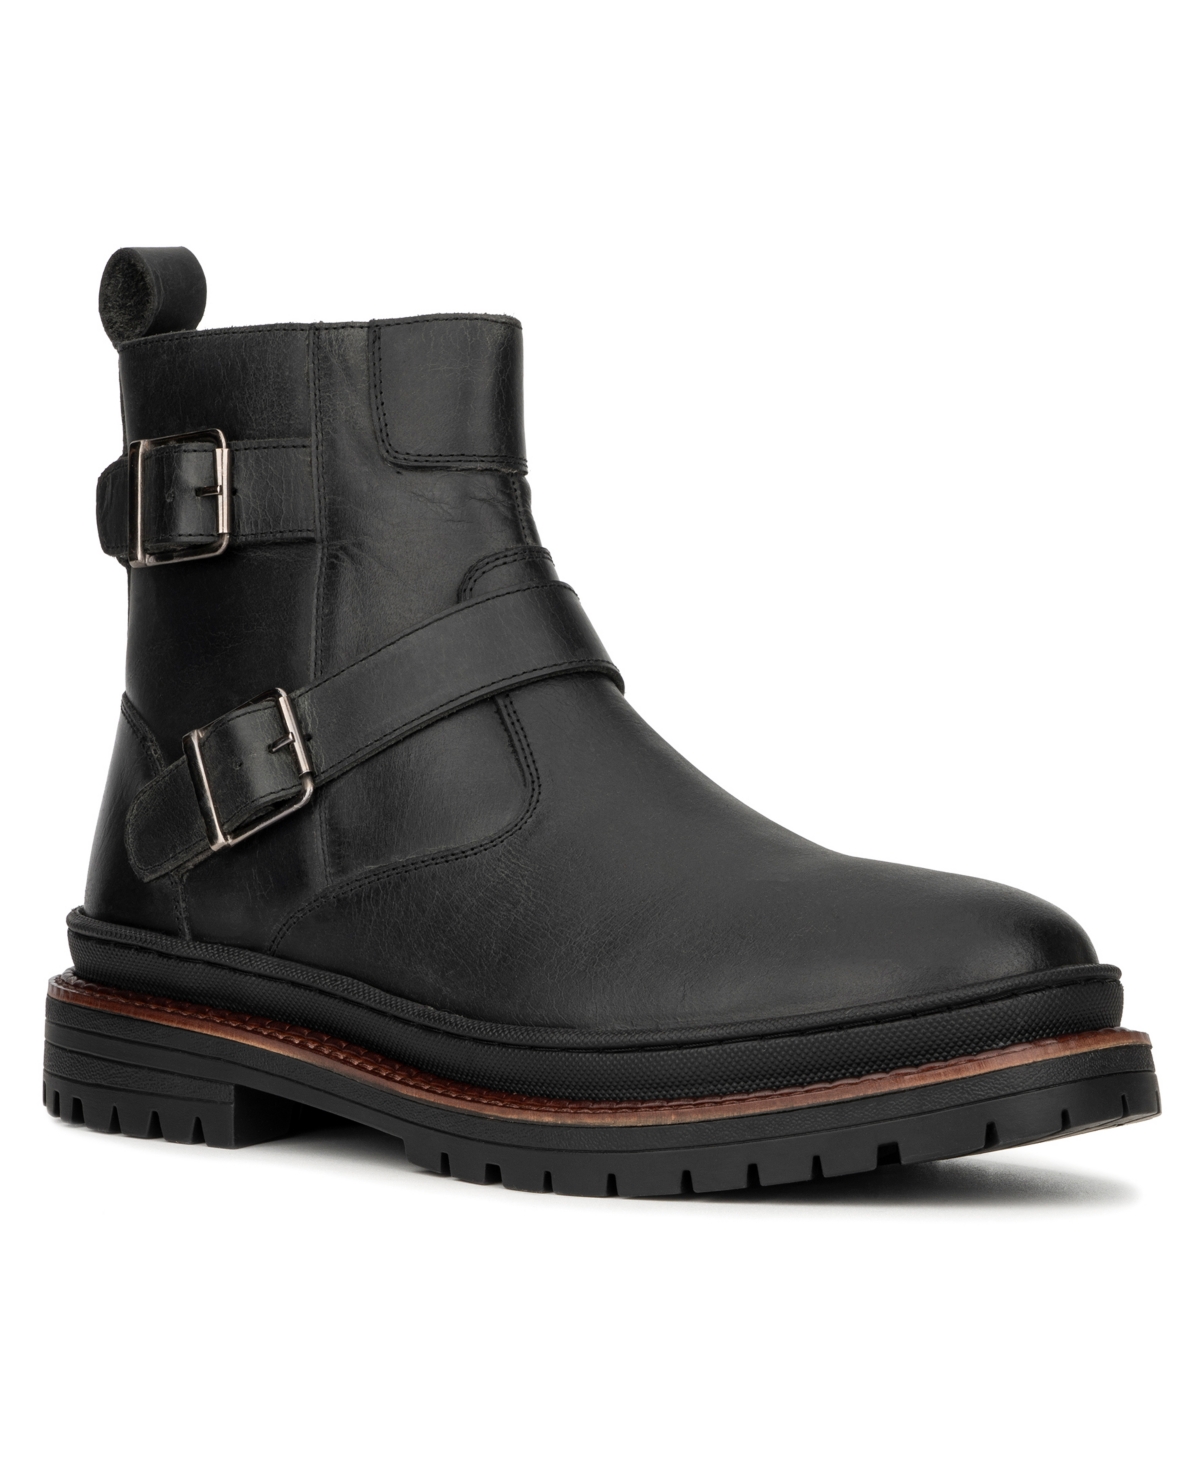 Men's Quaid Chelsea Boots - Black